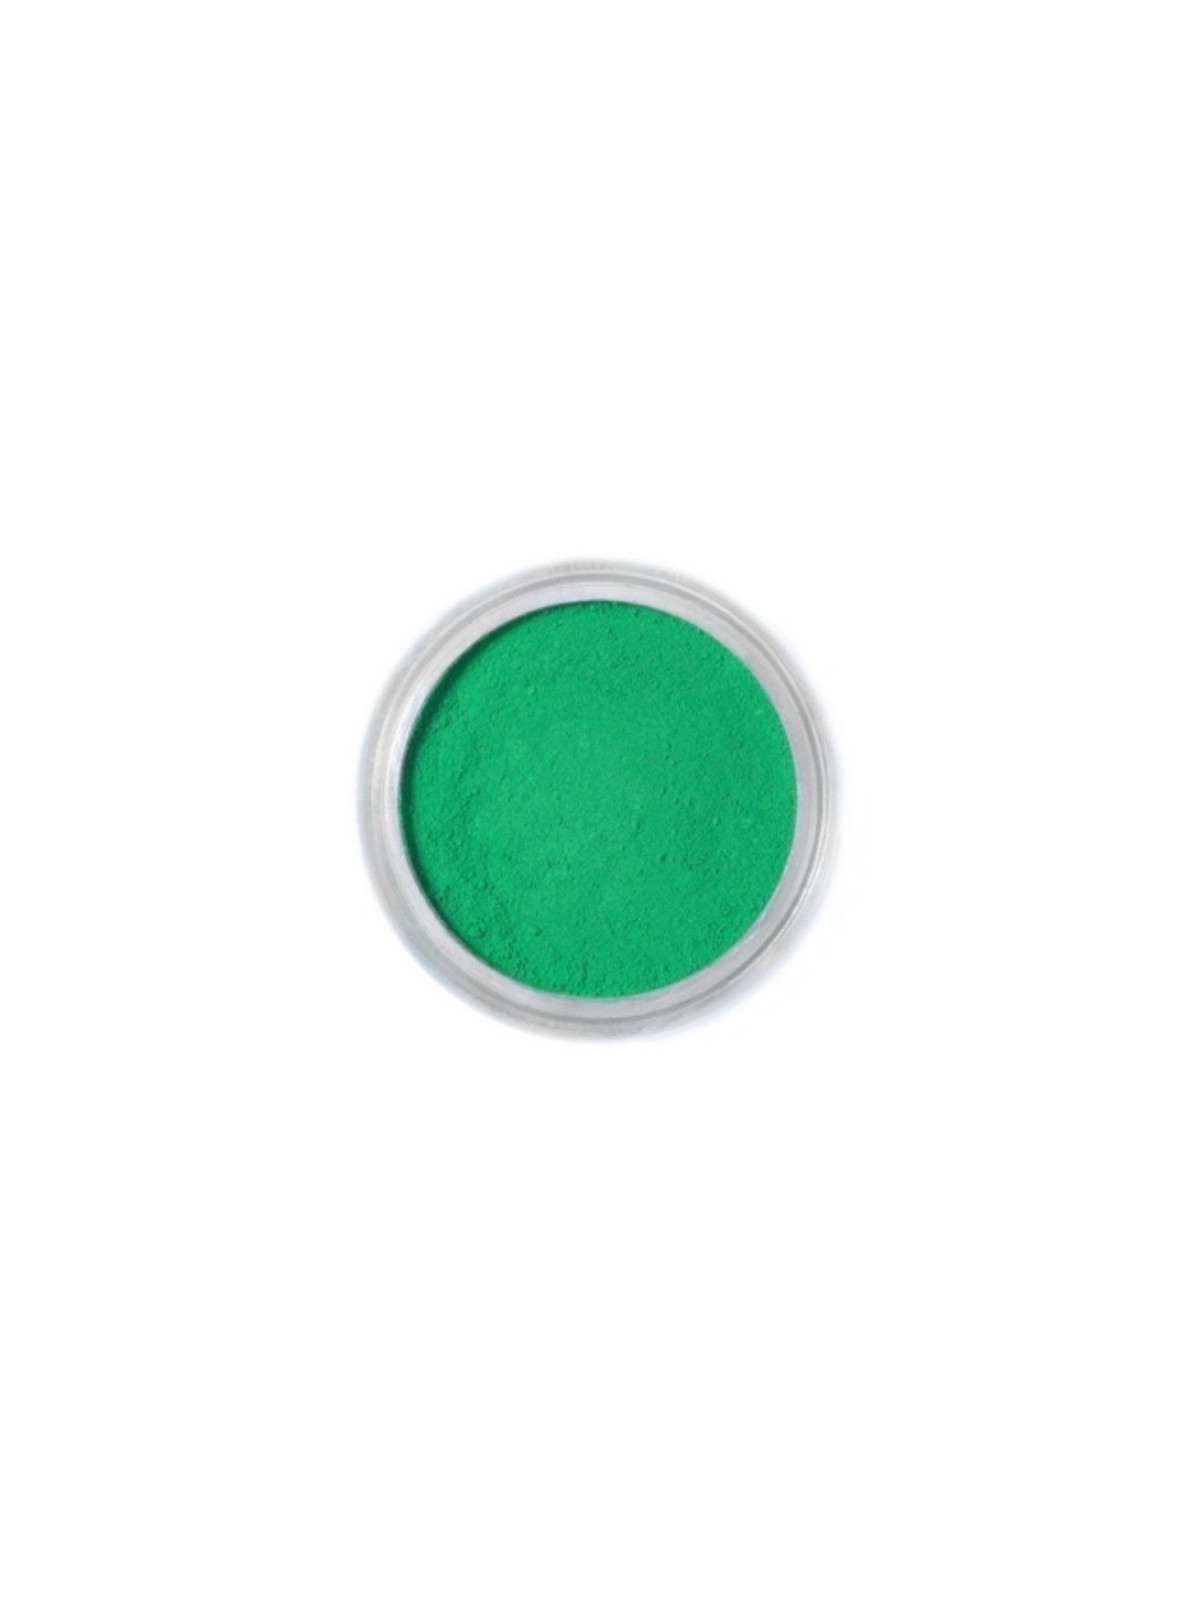 Edible dust color Fractal - Ivy Green (1,5 g)